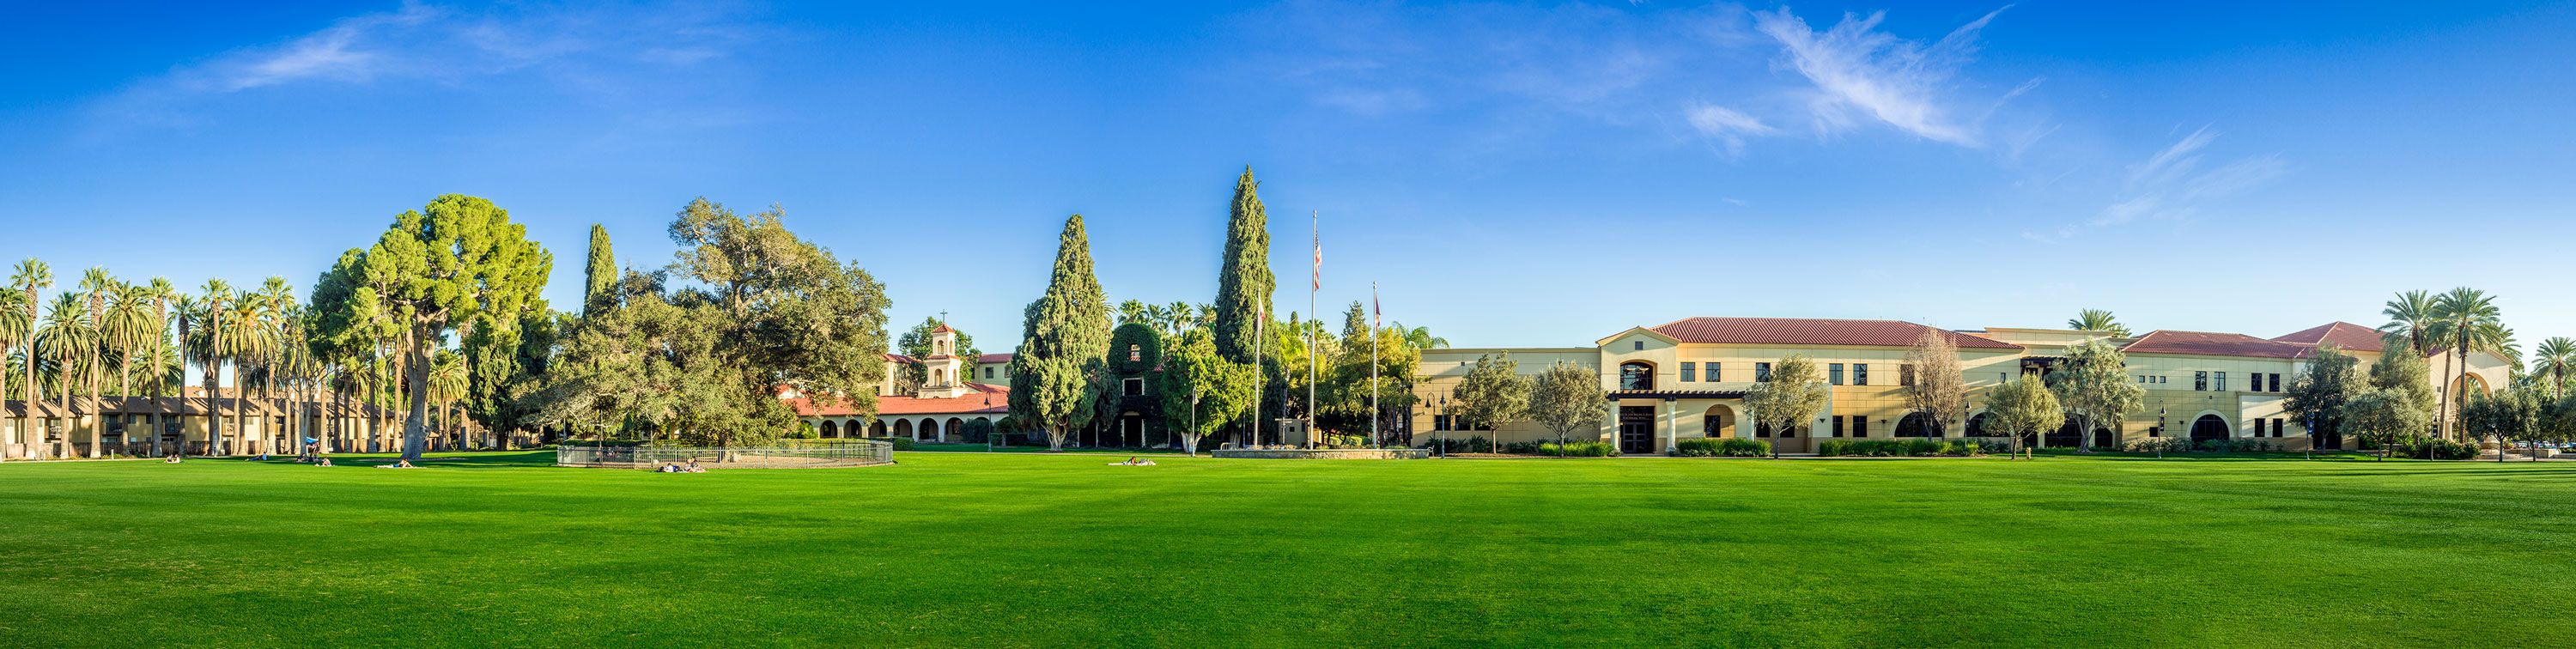 Front Lawn at California Baptist University campus